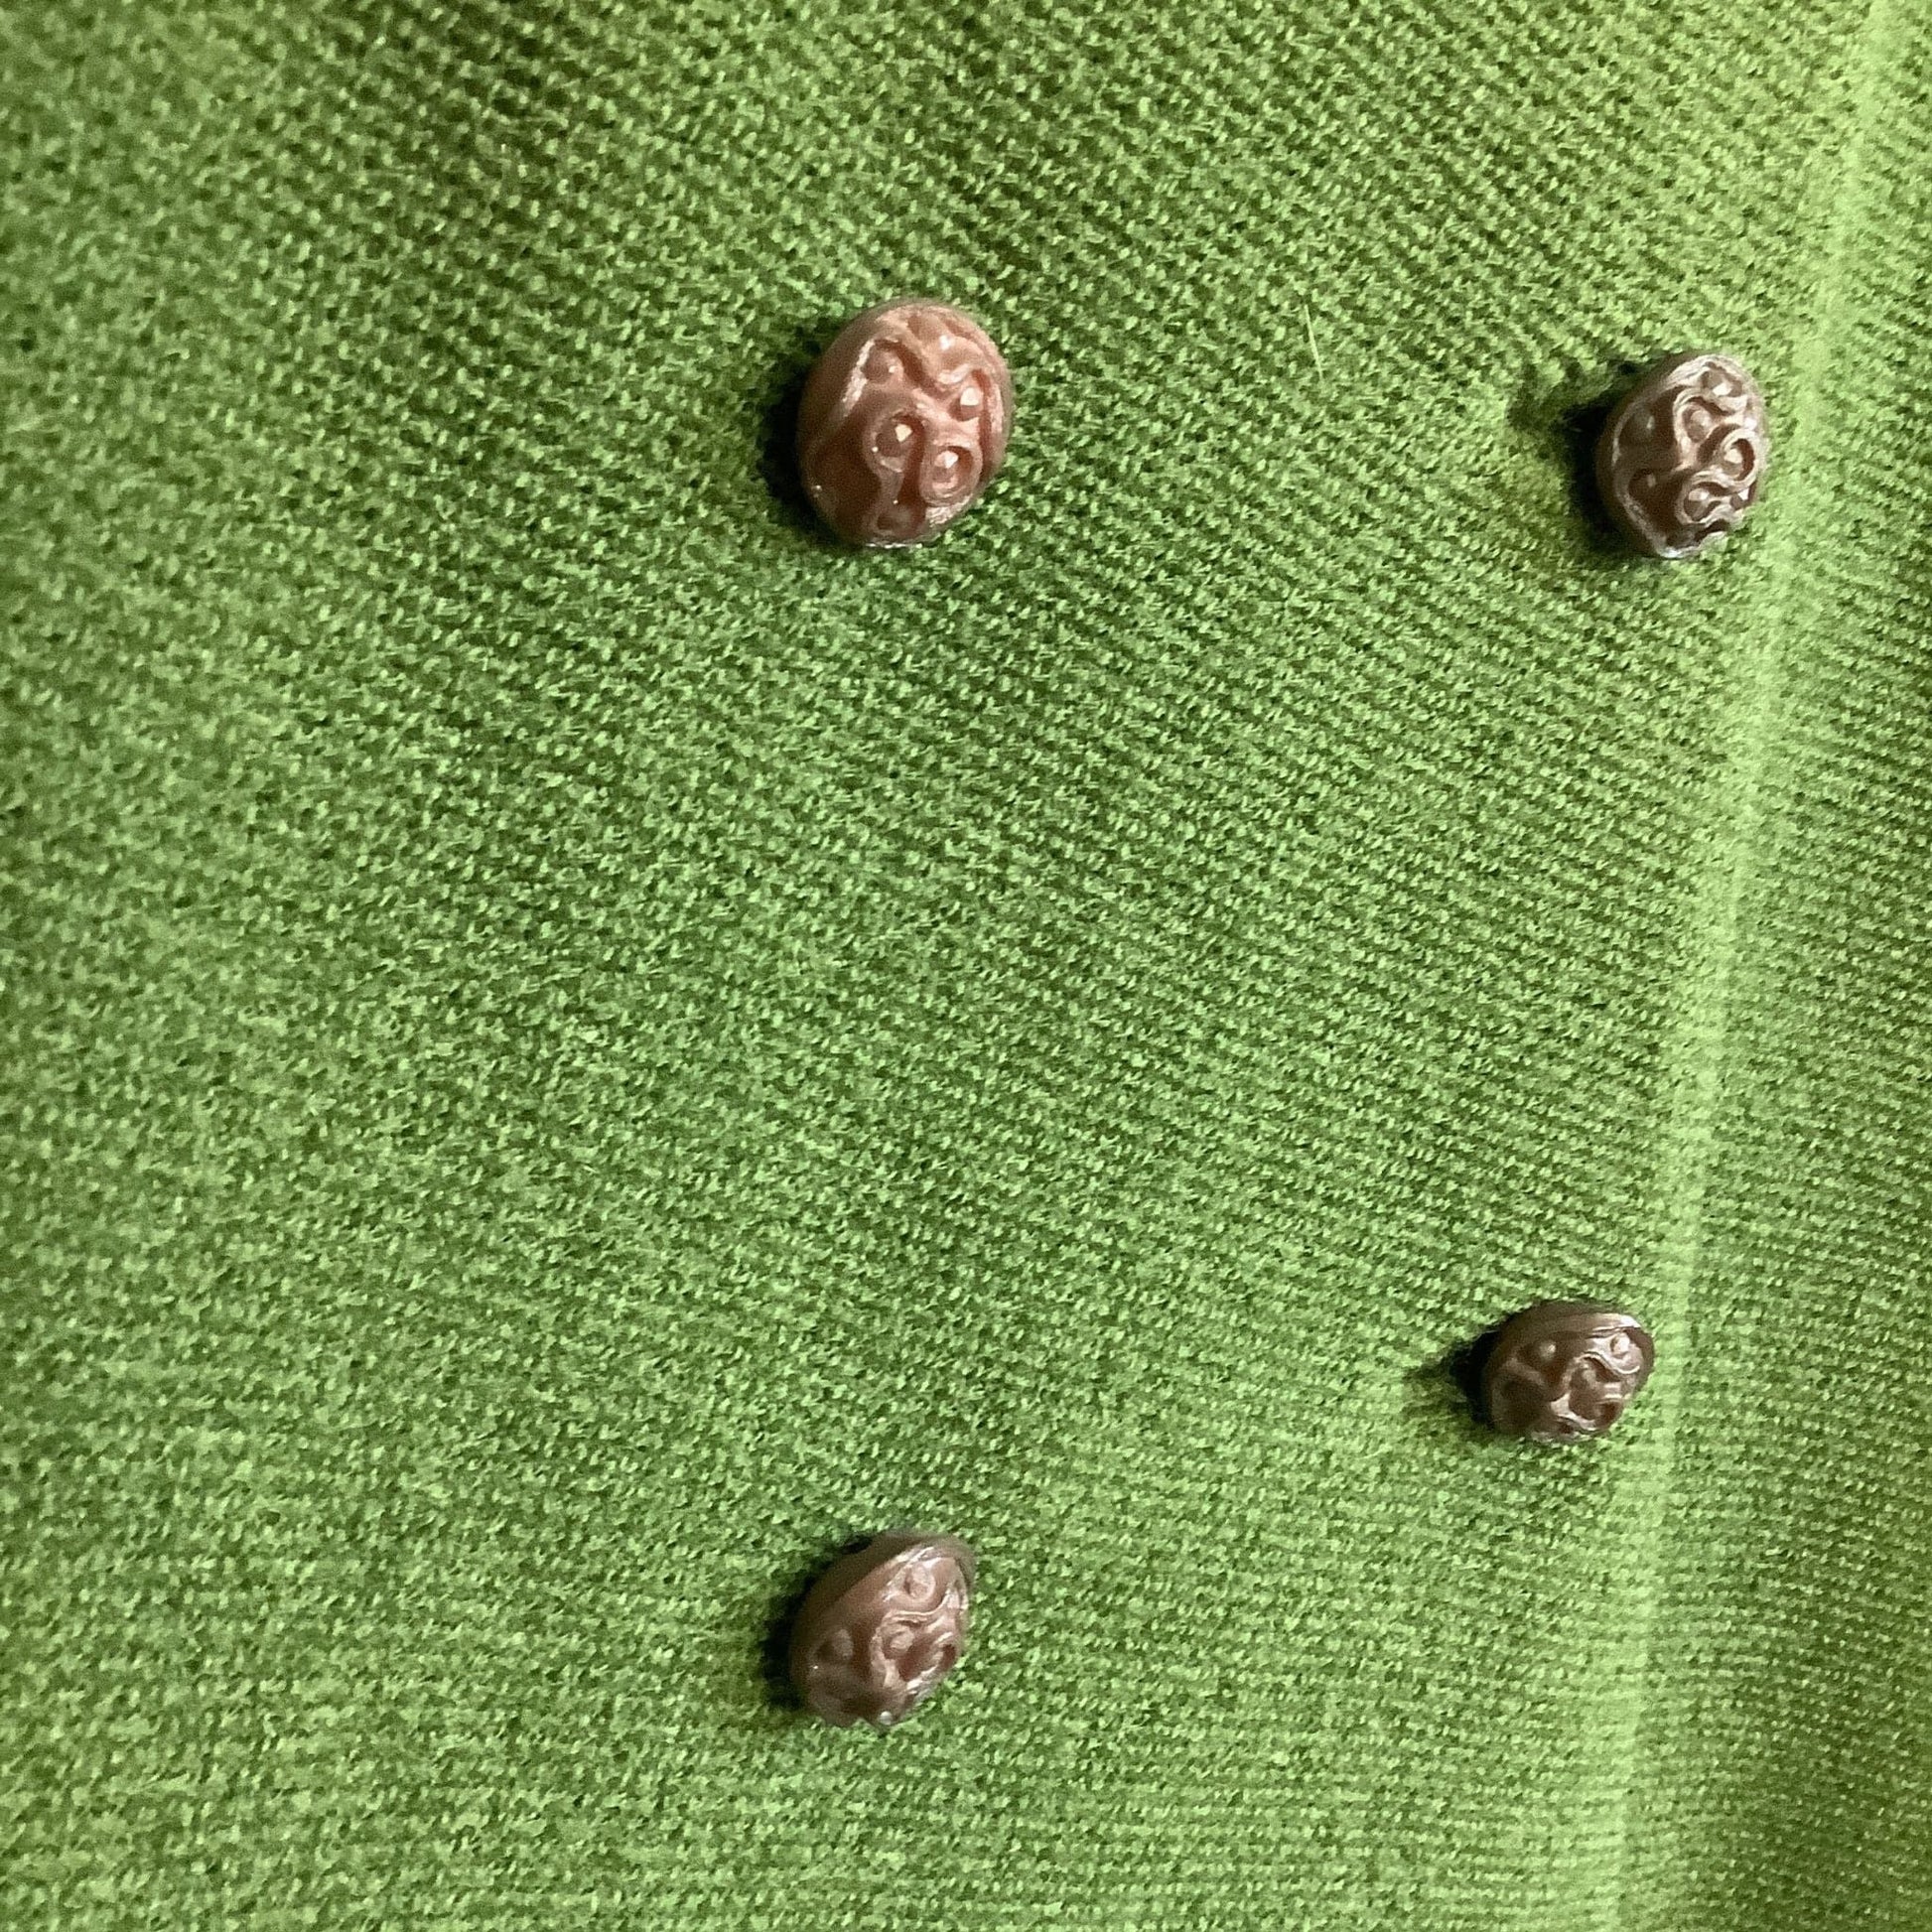 Vintage Green Wool Coat Small / Green / Vintage 1960s